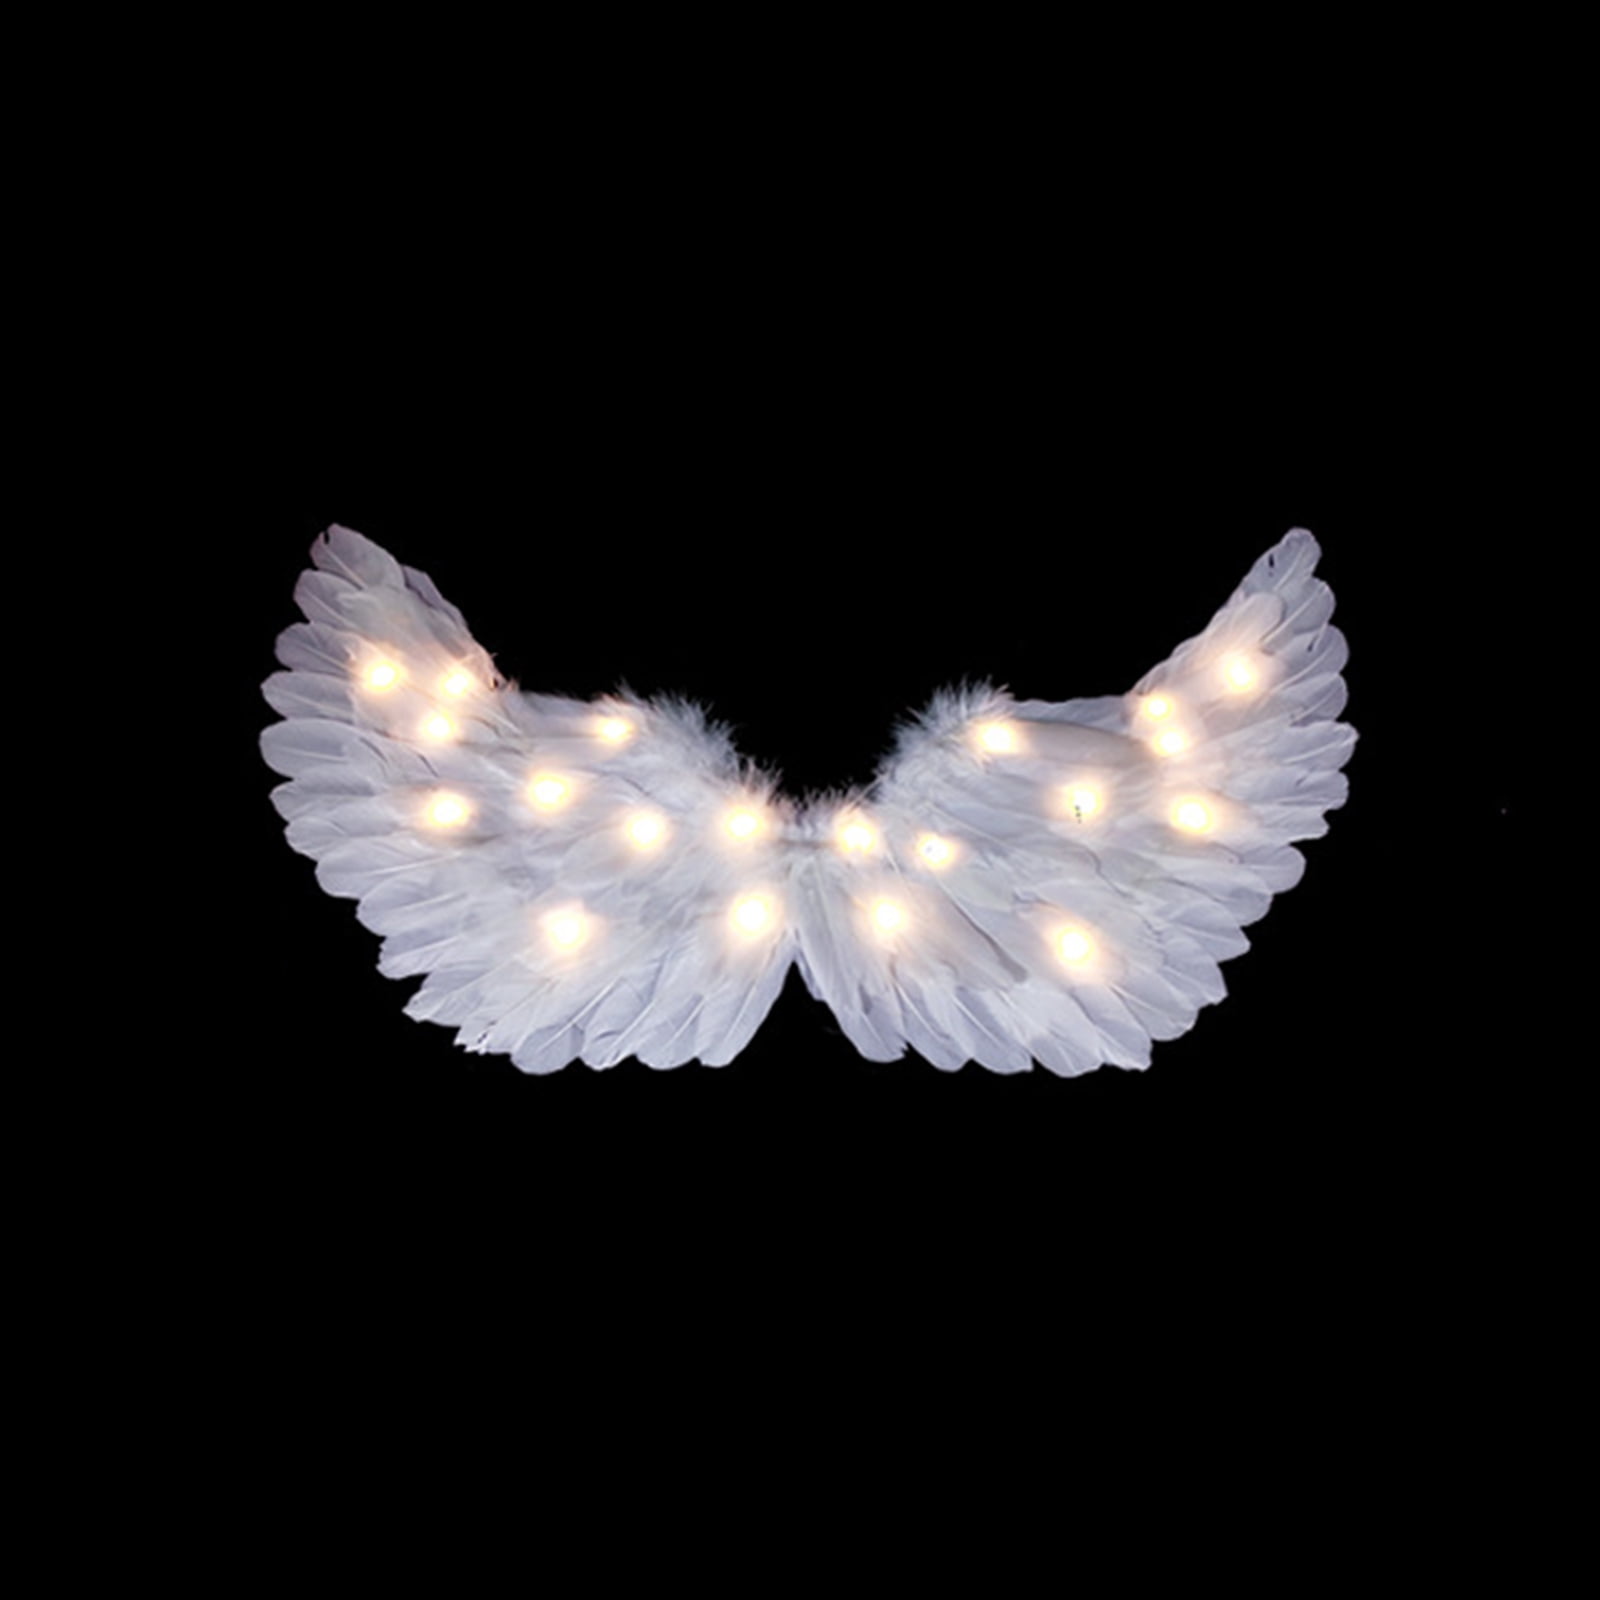 Asdomo Angel Up Angel Wings With Led Lights,Kids Costume Christmas Eve,Party - Walmart.com